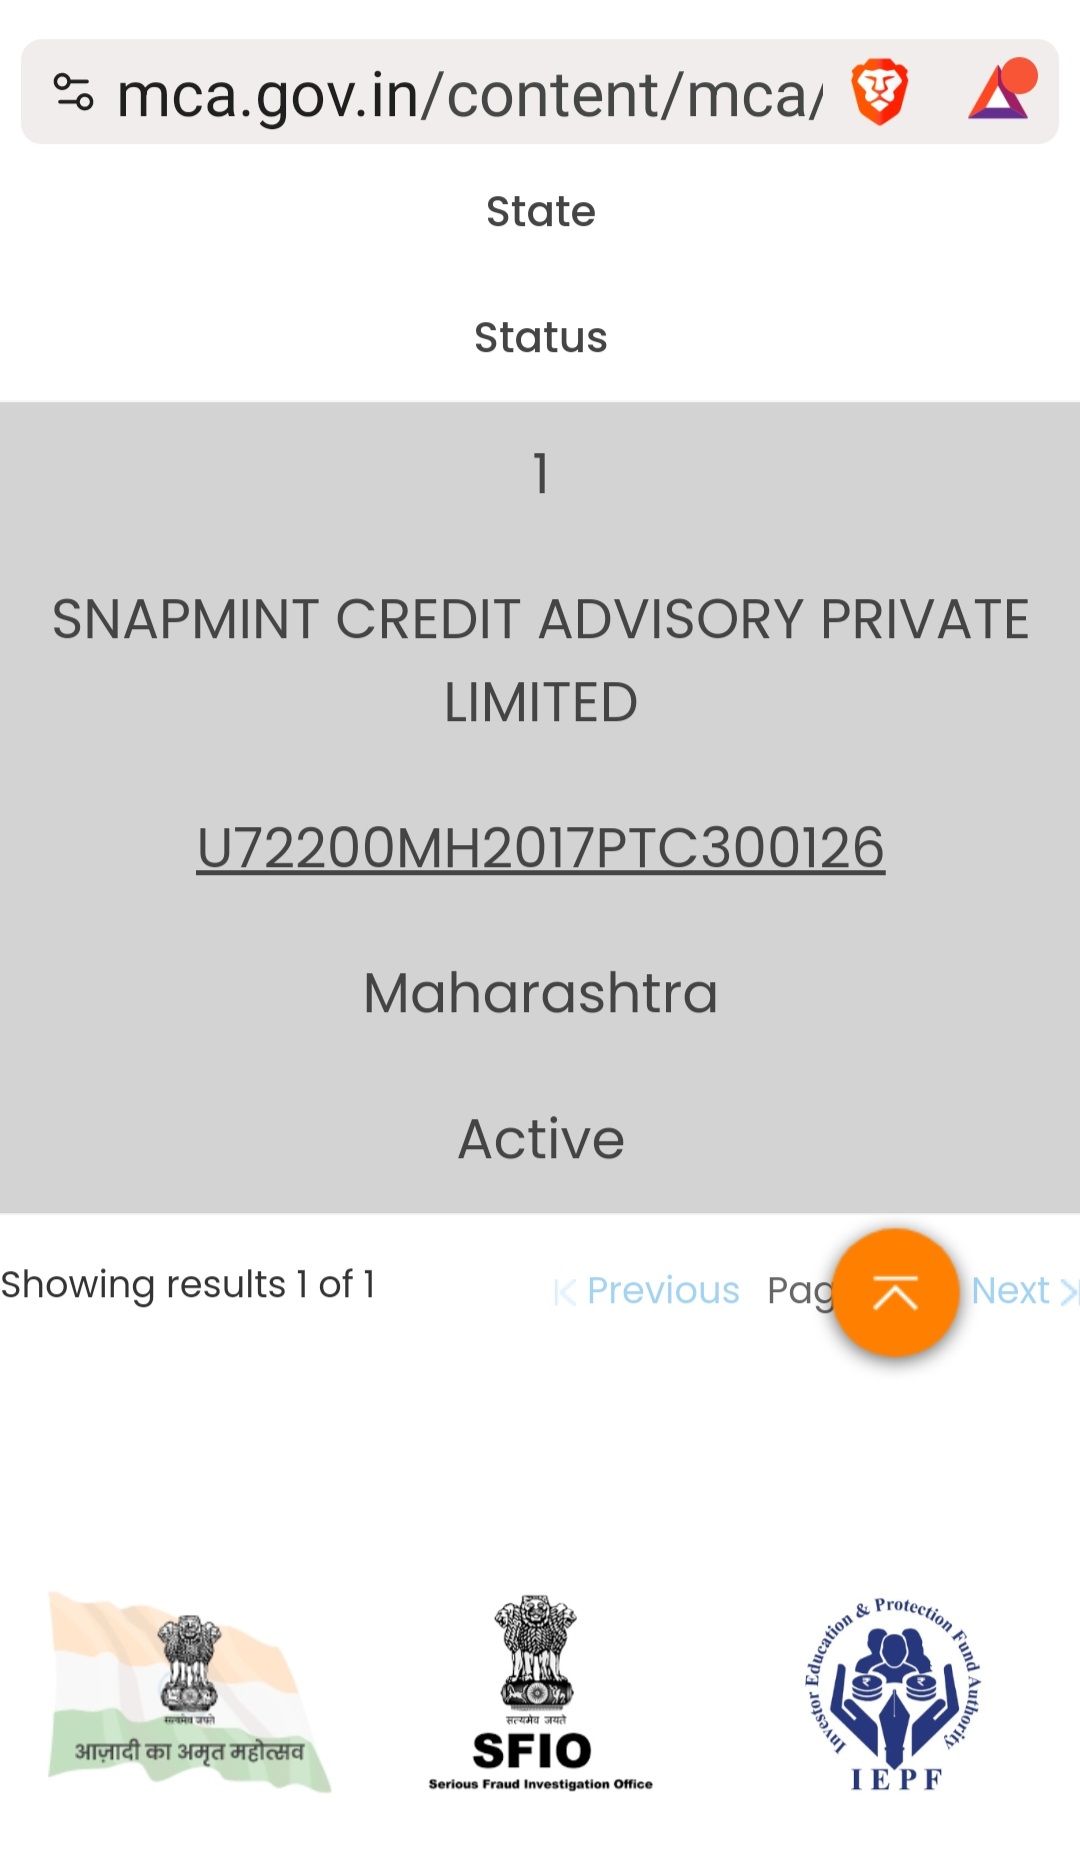 Snapmint Mca site verified